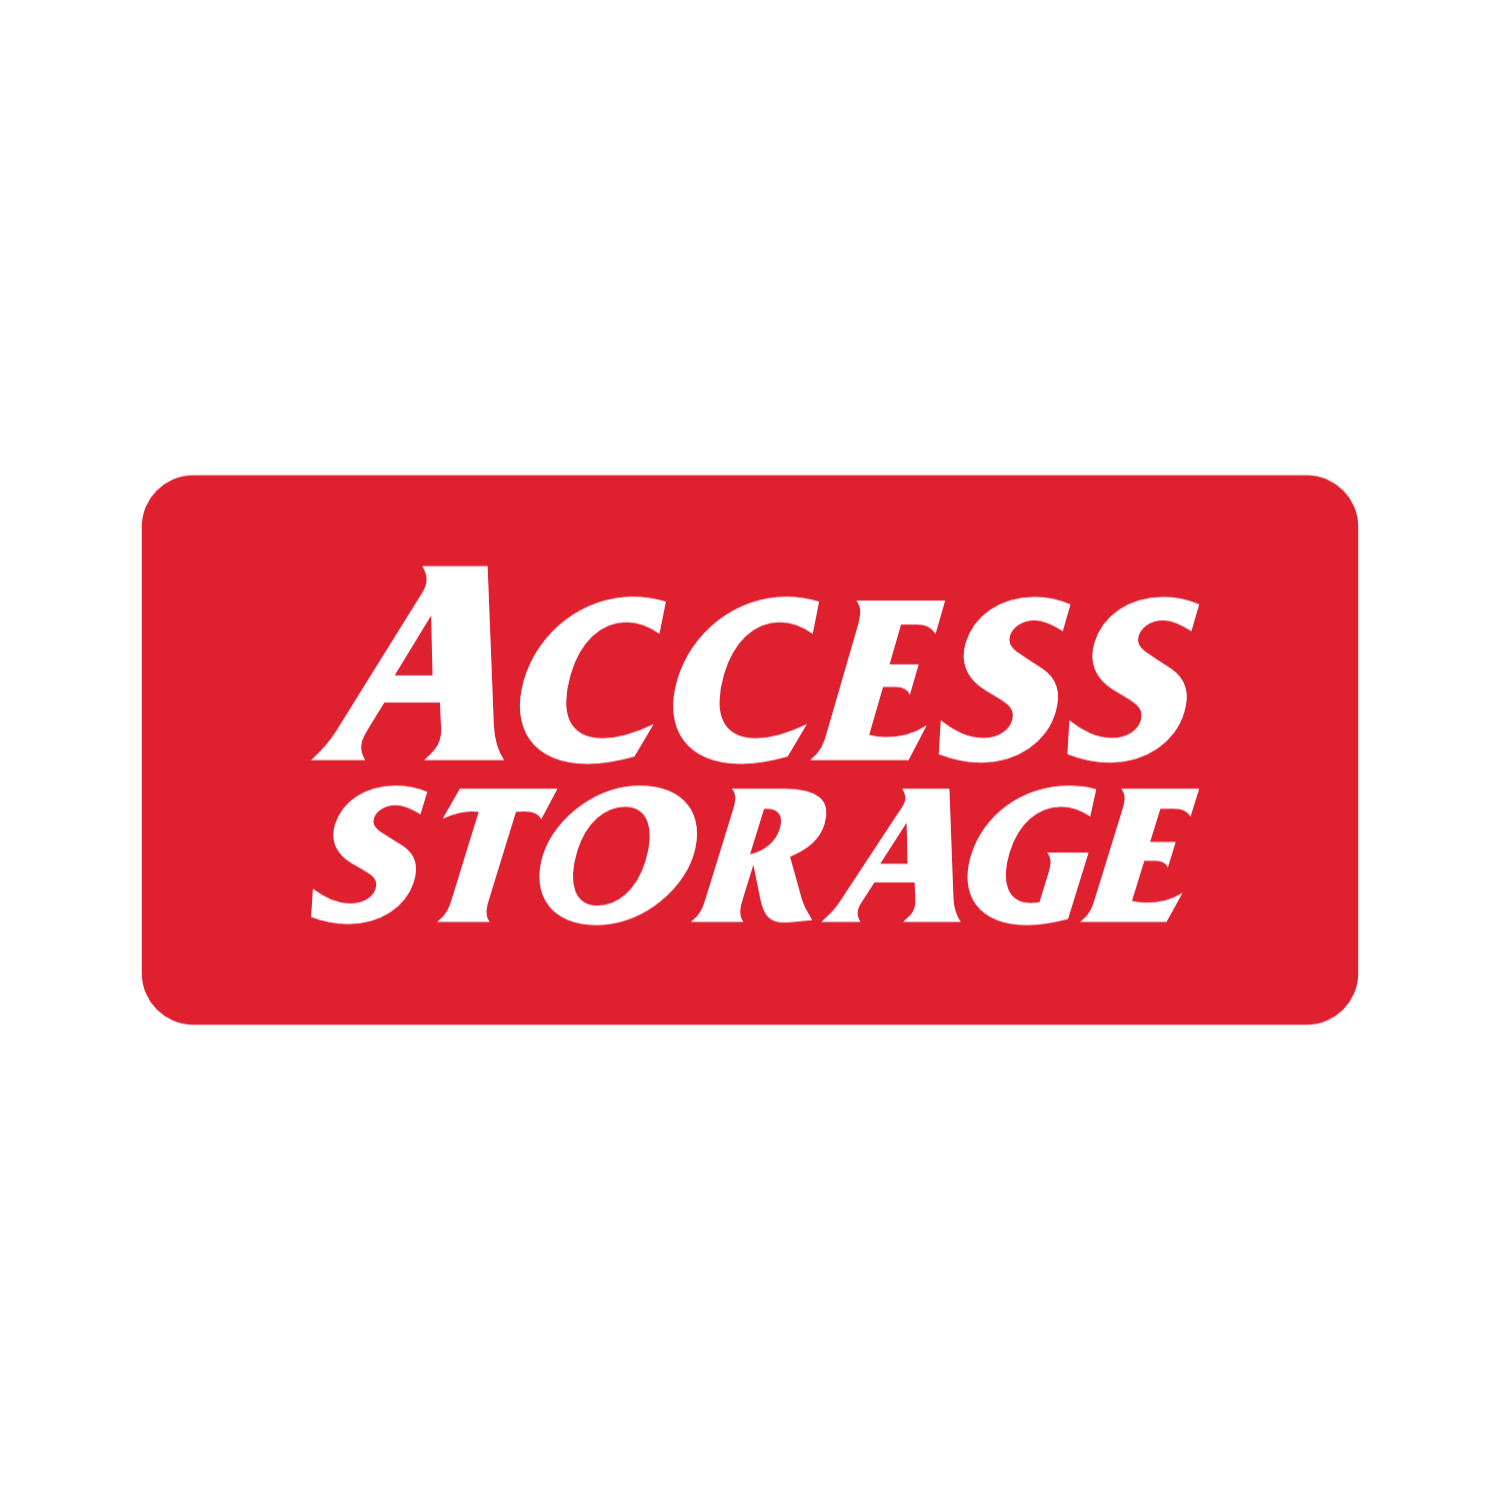 Access Storage - Moose Jaw - North (Self-Serve) - Mini entreposage